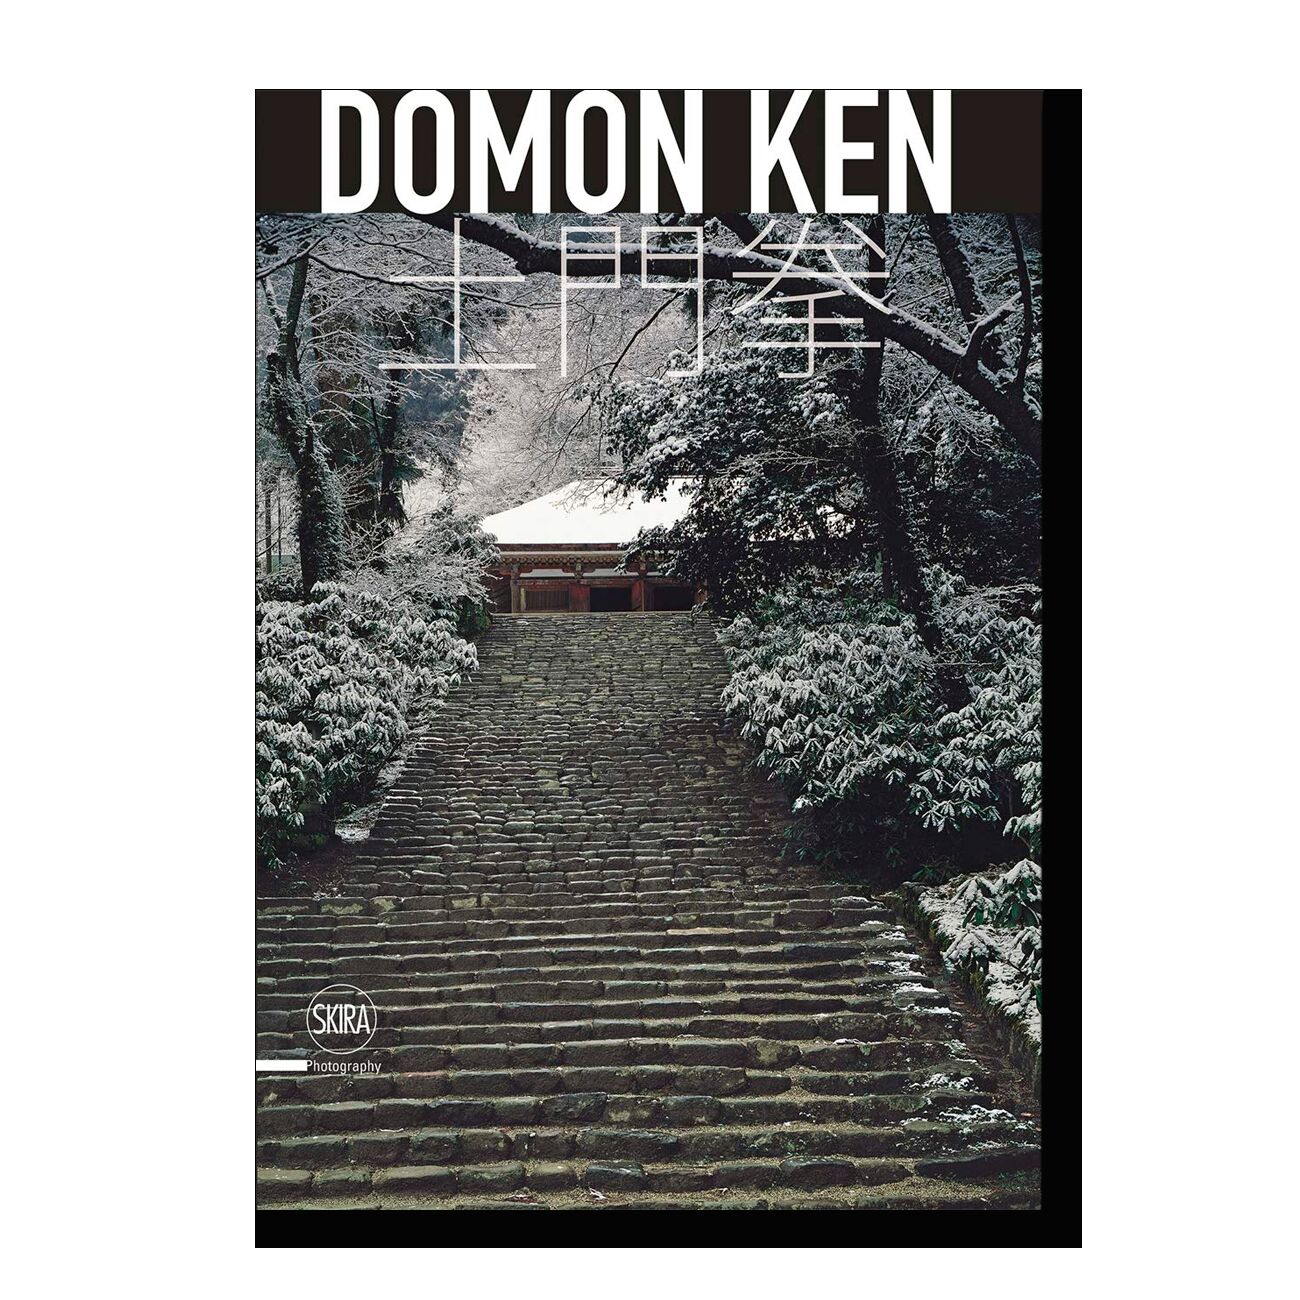 Domon Ken: The Master of Japanese Realism